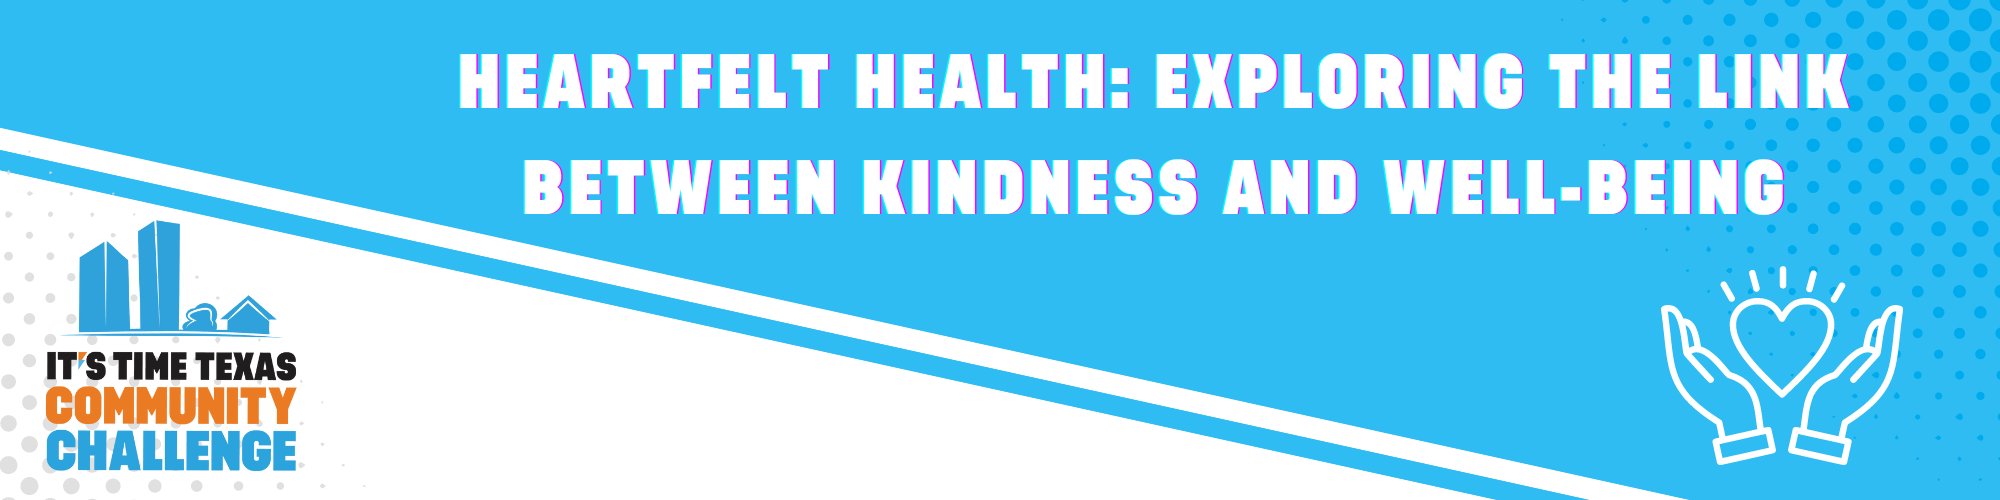 Kindness and health benefits image